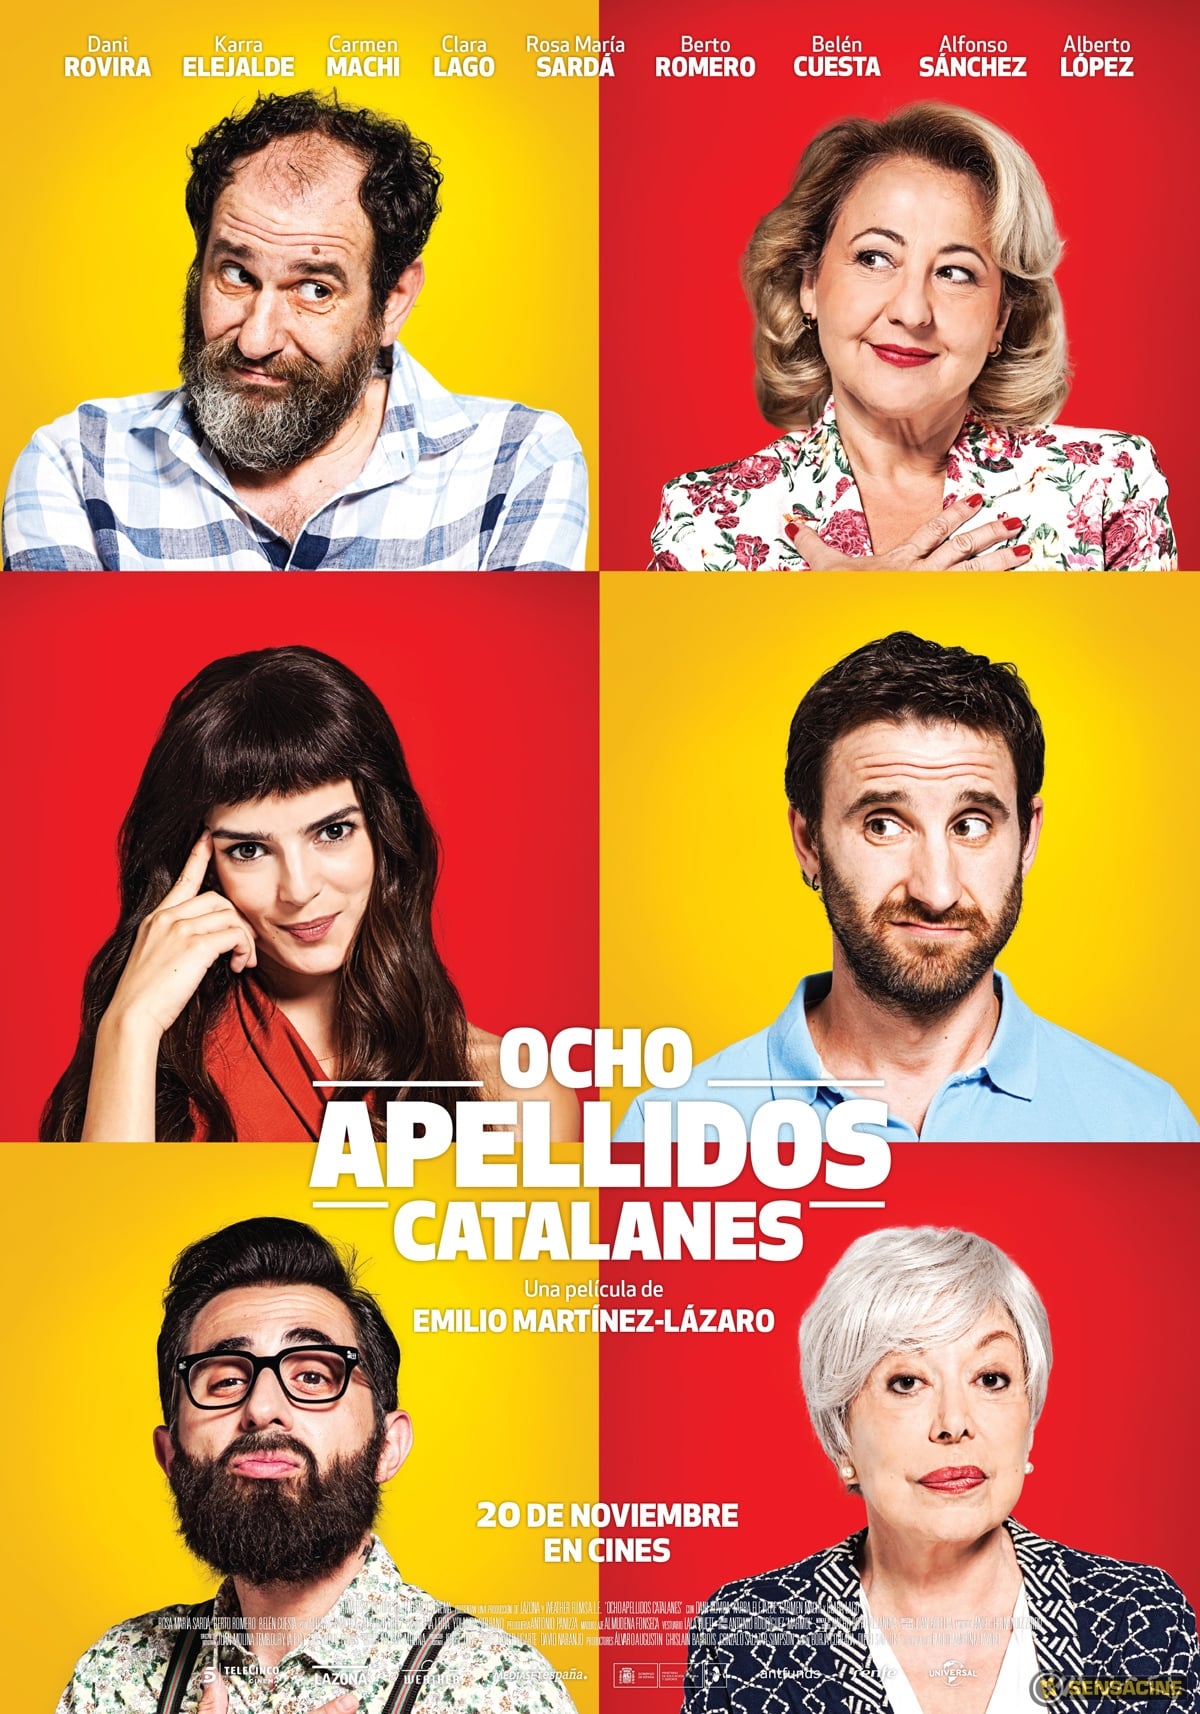 Watch Ocho apellidos catalanes Now!